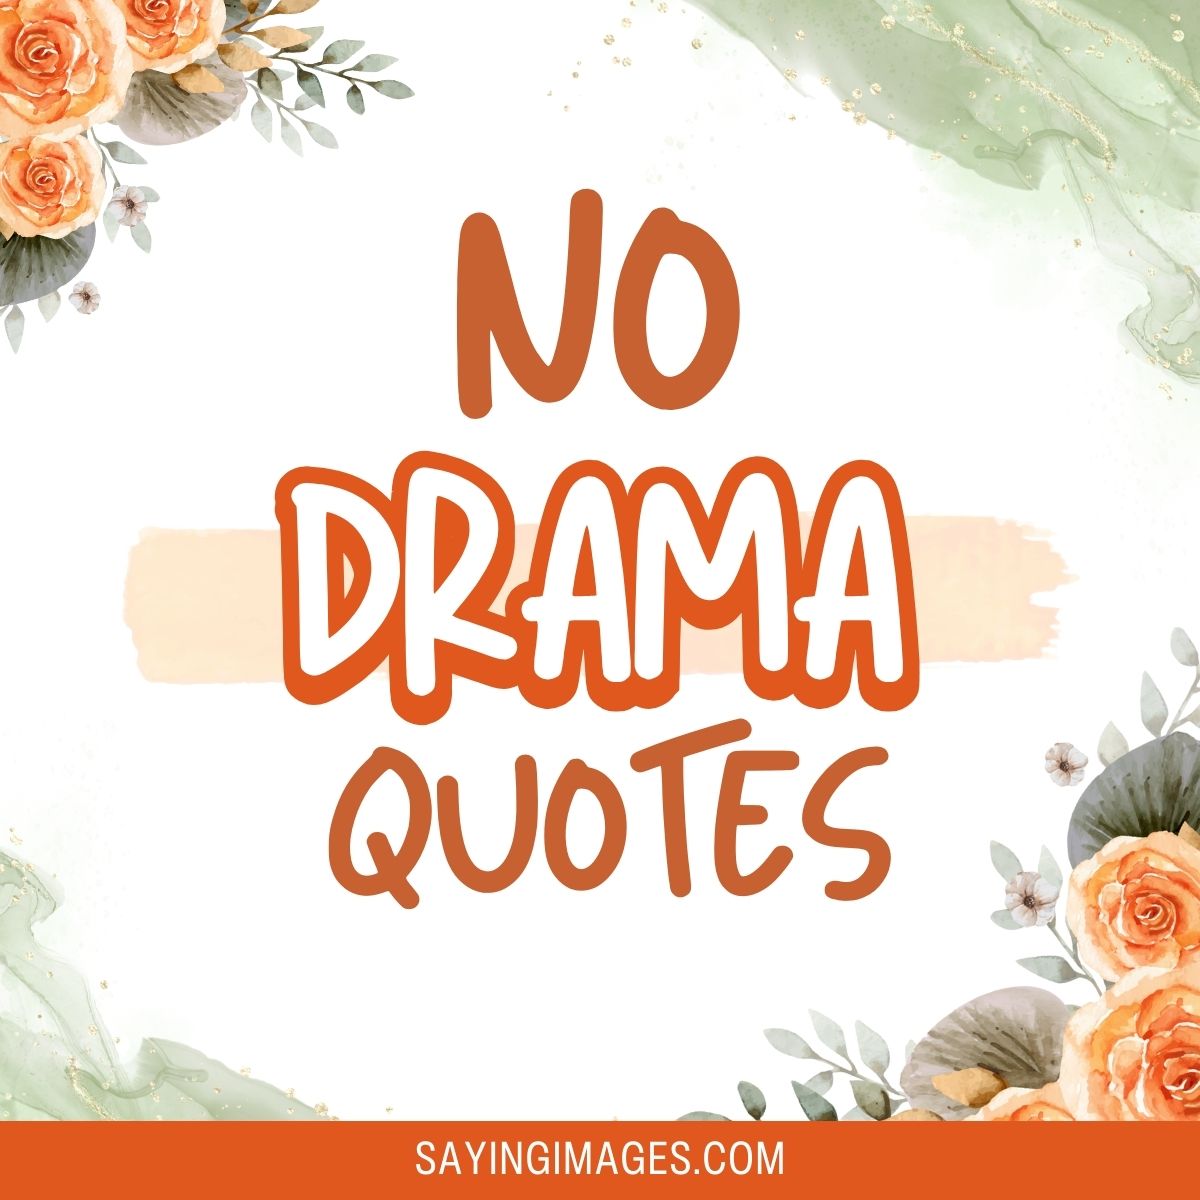 Quotes To Help You Live A No Drama Life